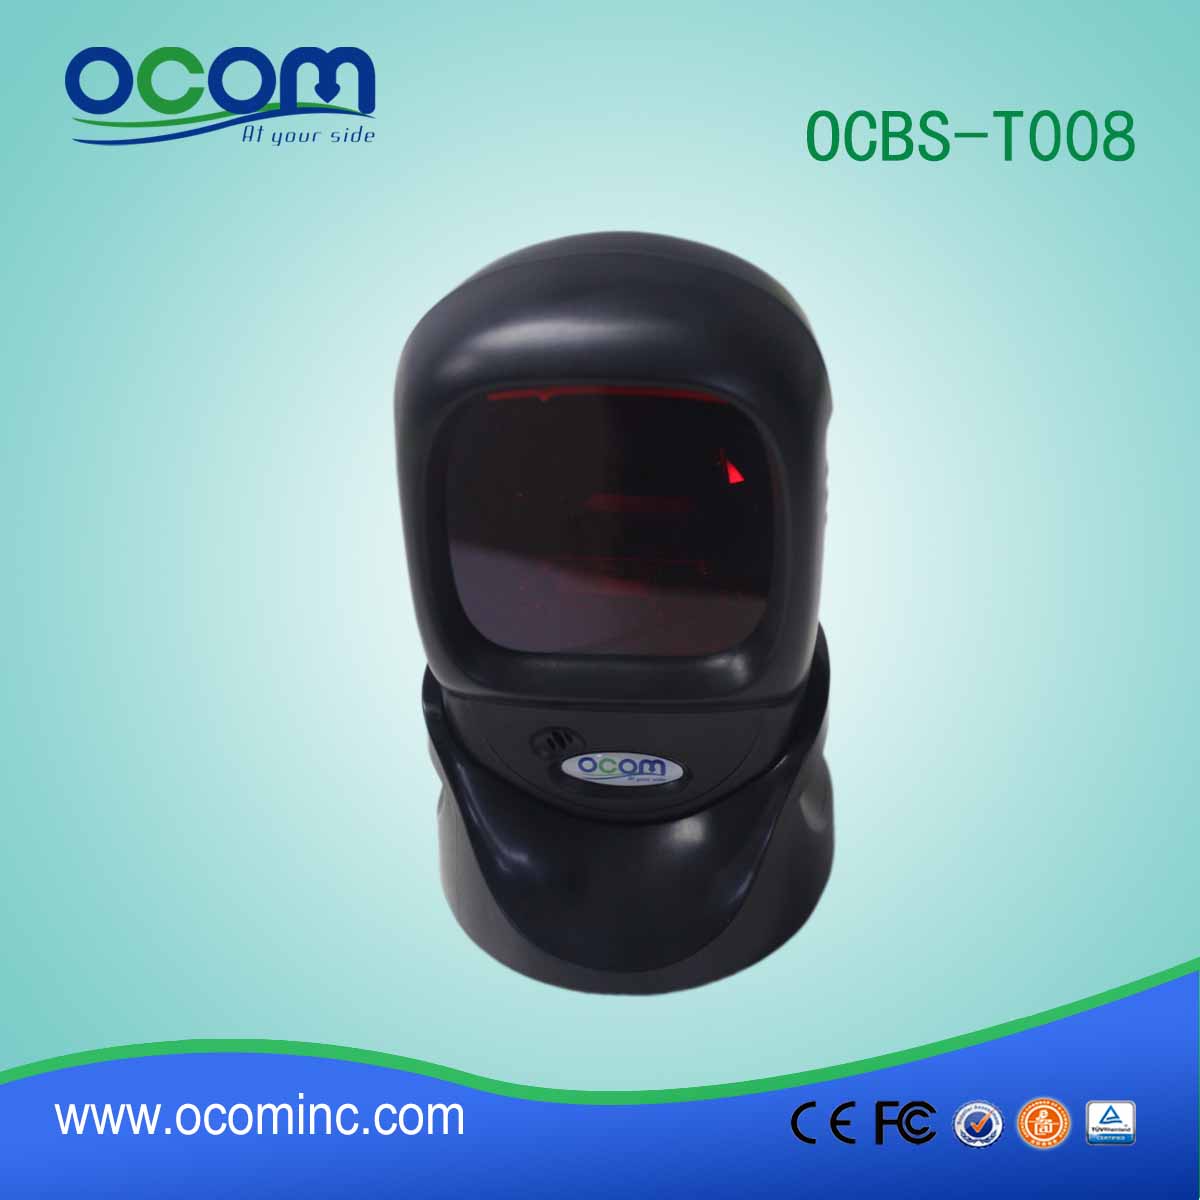 OCBs-T008 Σούπερ μάρκετ Omini Ταμειακή Barcode POS Scanner